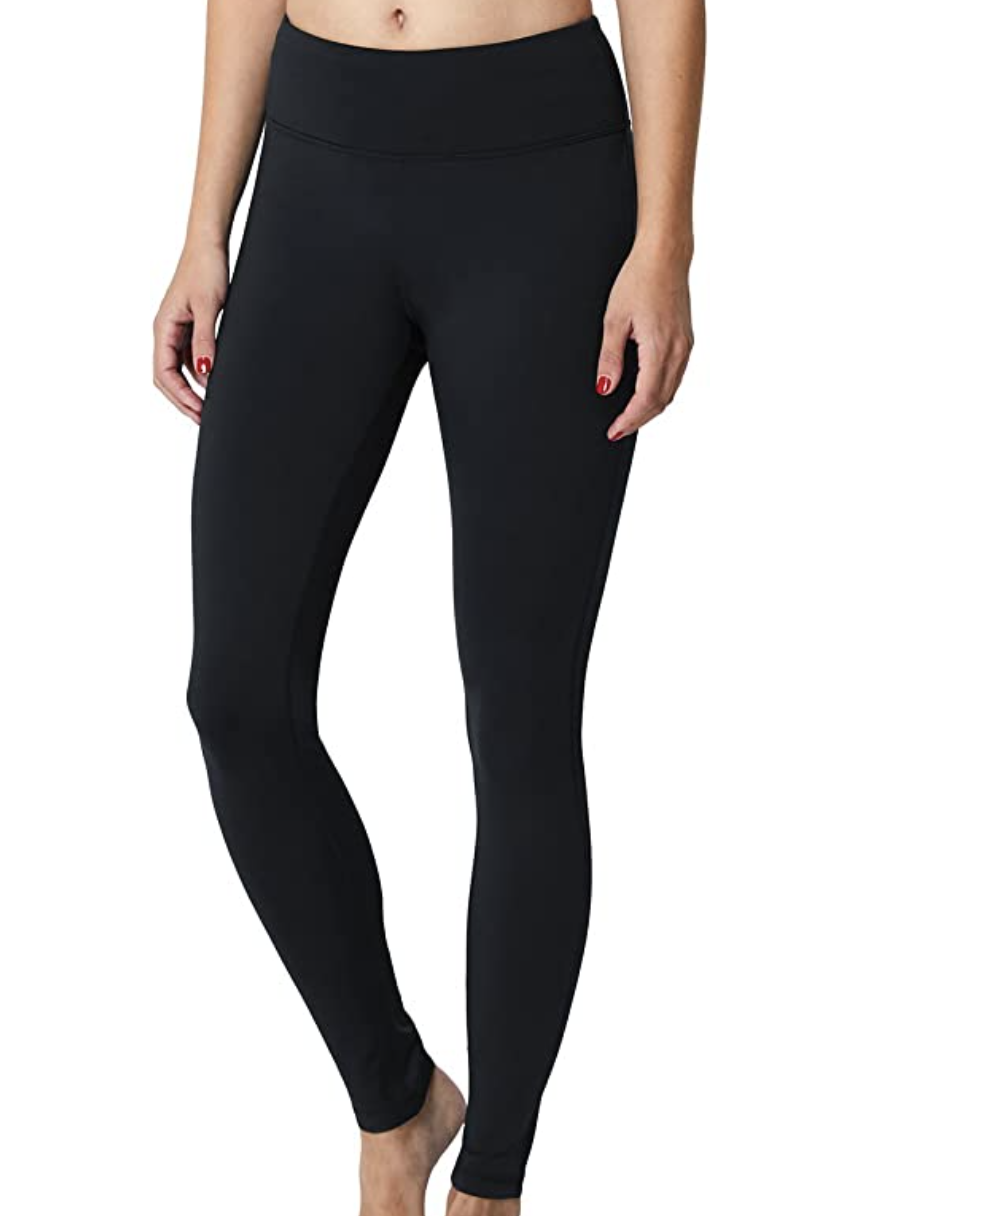 black winter pants for women that mimic black leggings